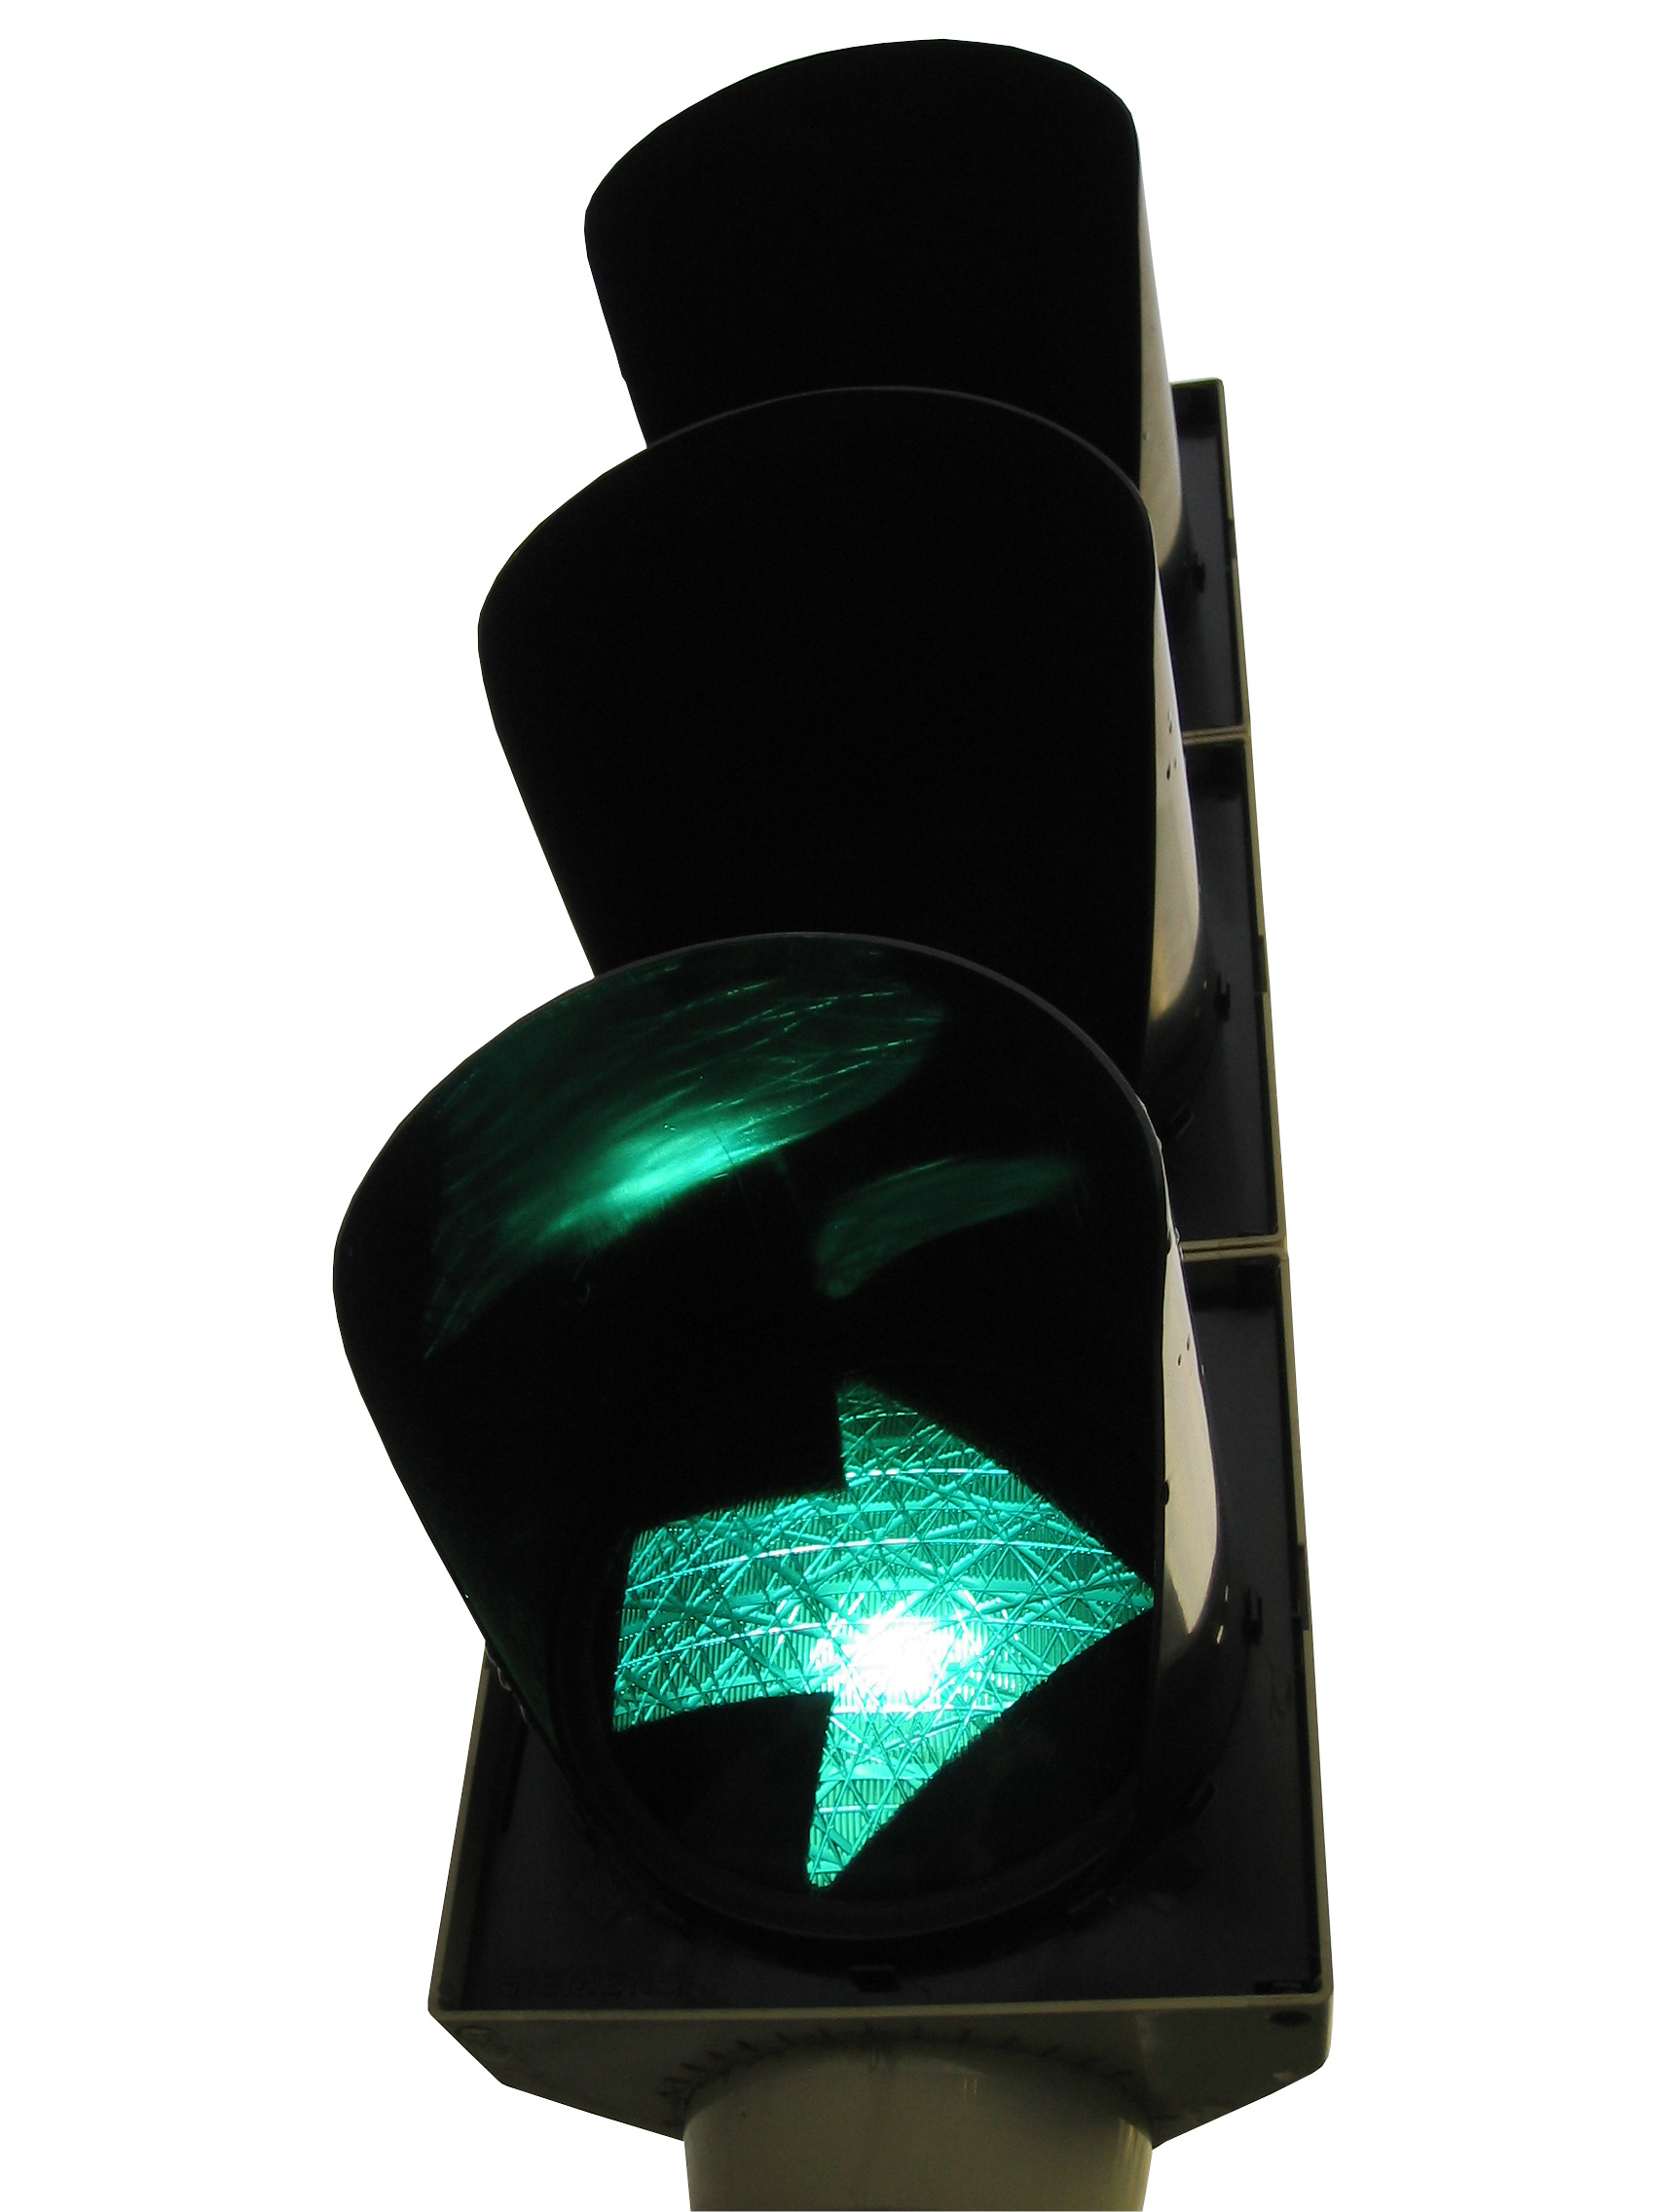 Traffic Light On Green - ClipArt Best